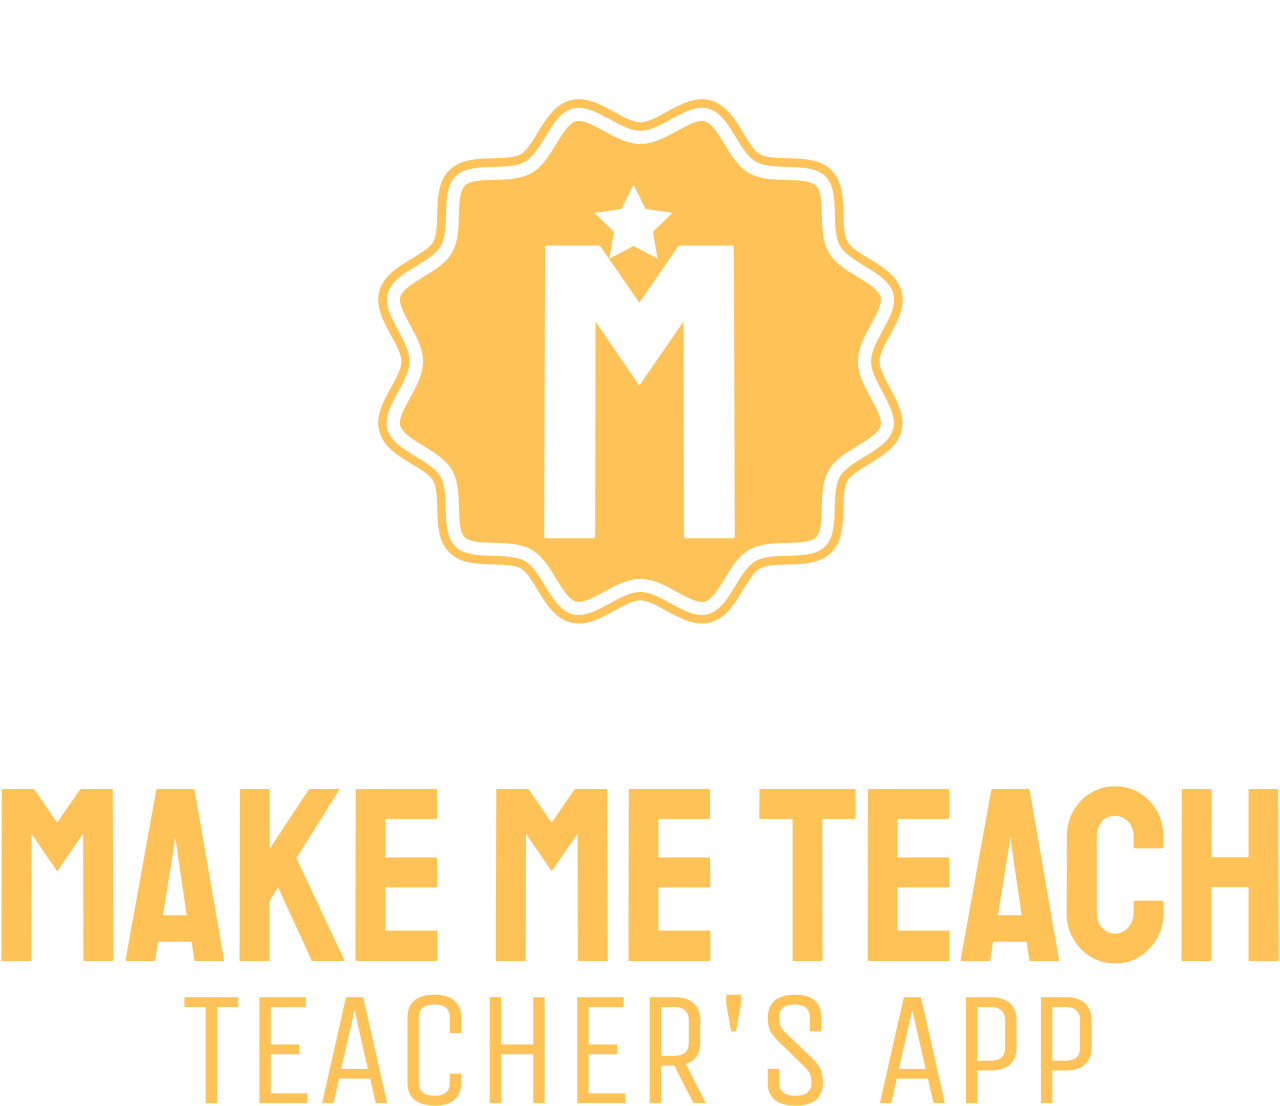 MAKE ME TEACH's web page